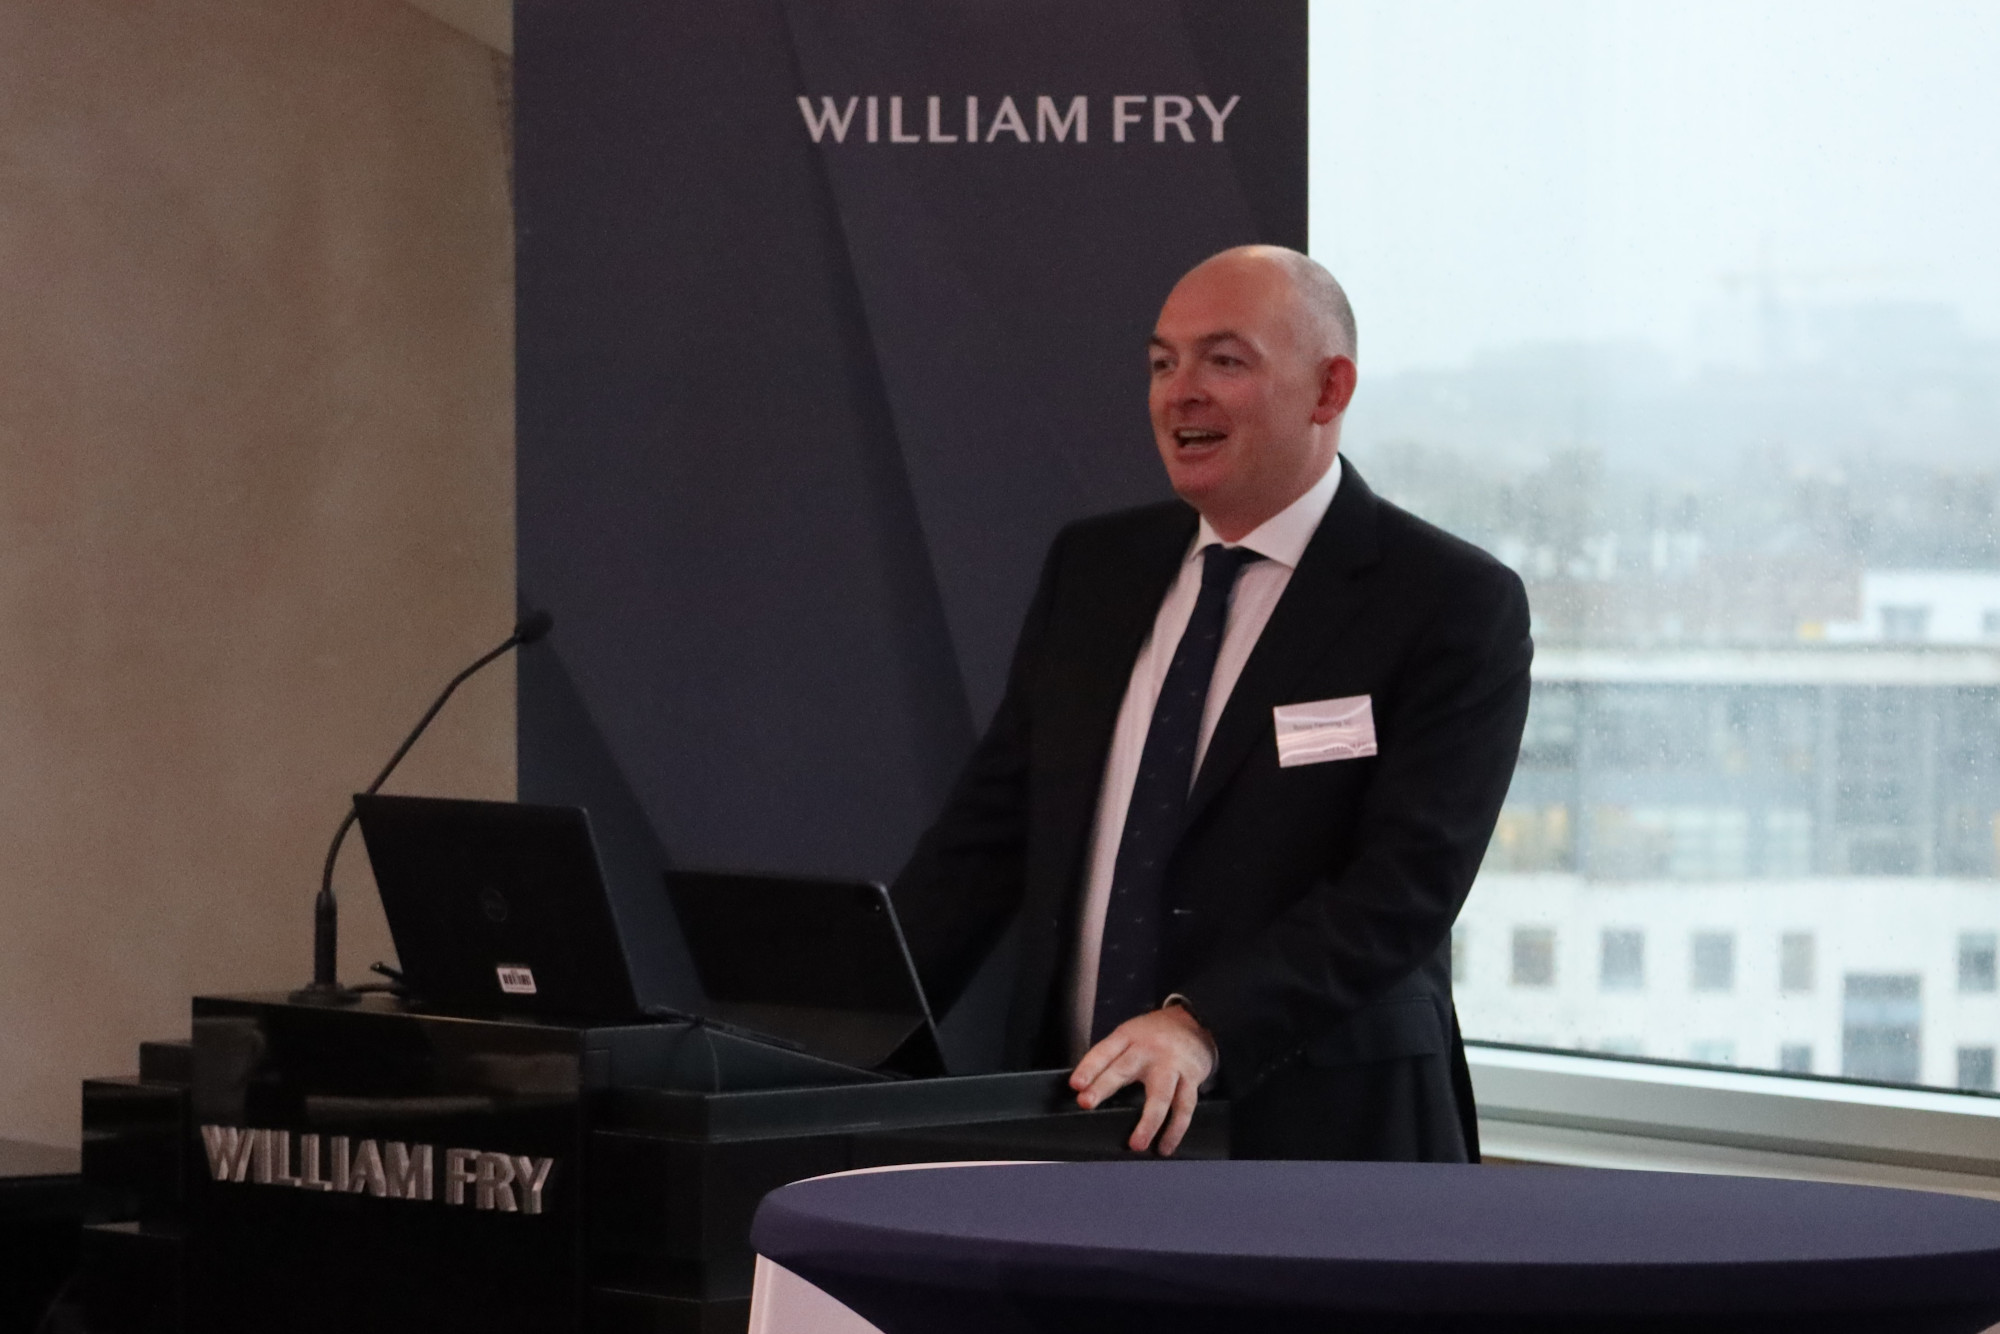 #InPictures: Rossa Fanning SC addresses William Fry digital reforms event